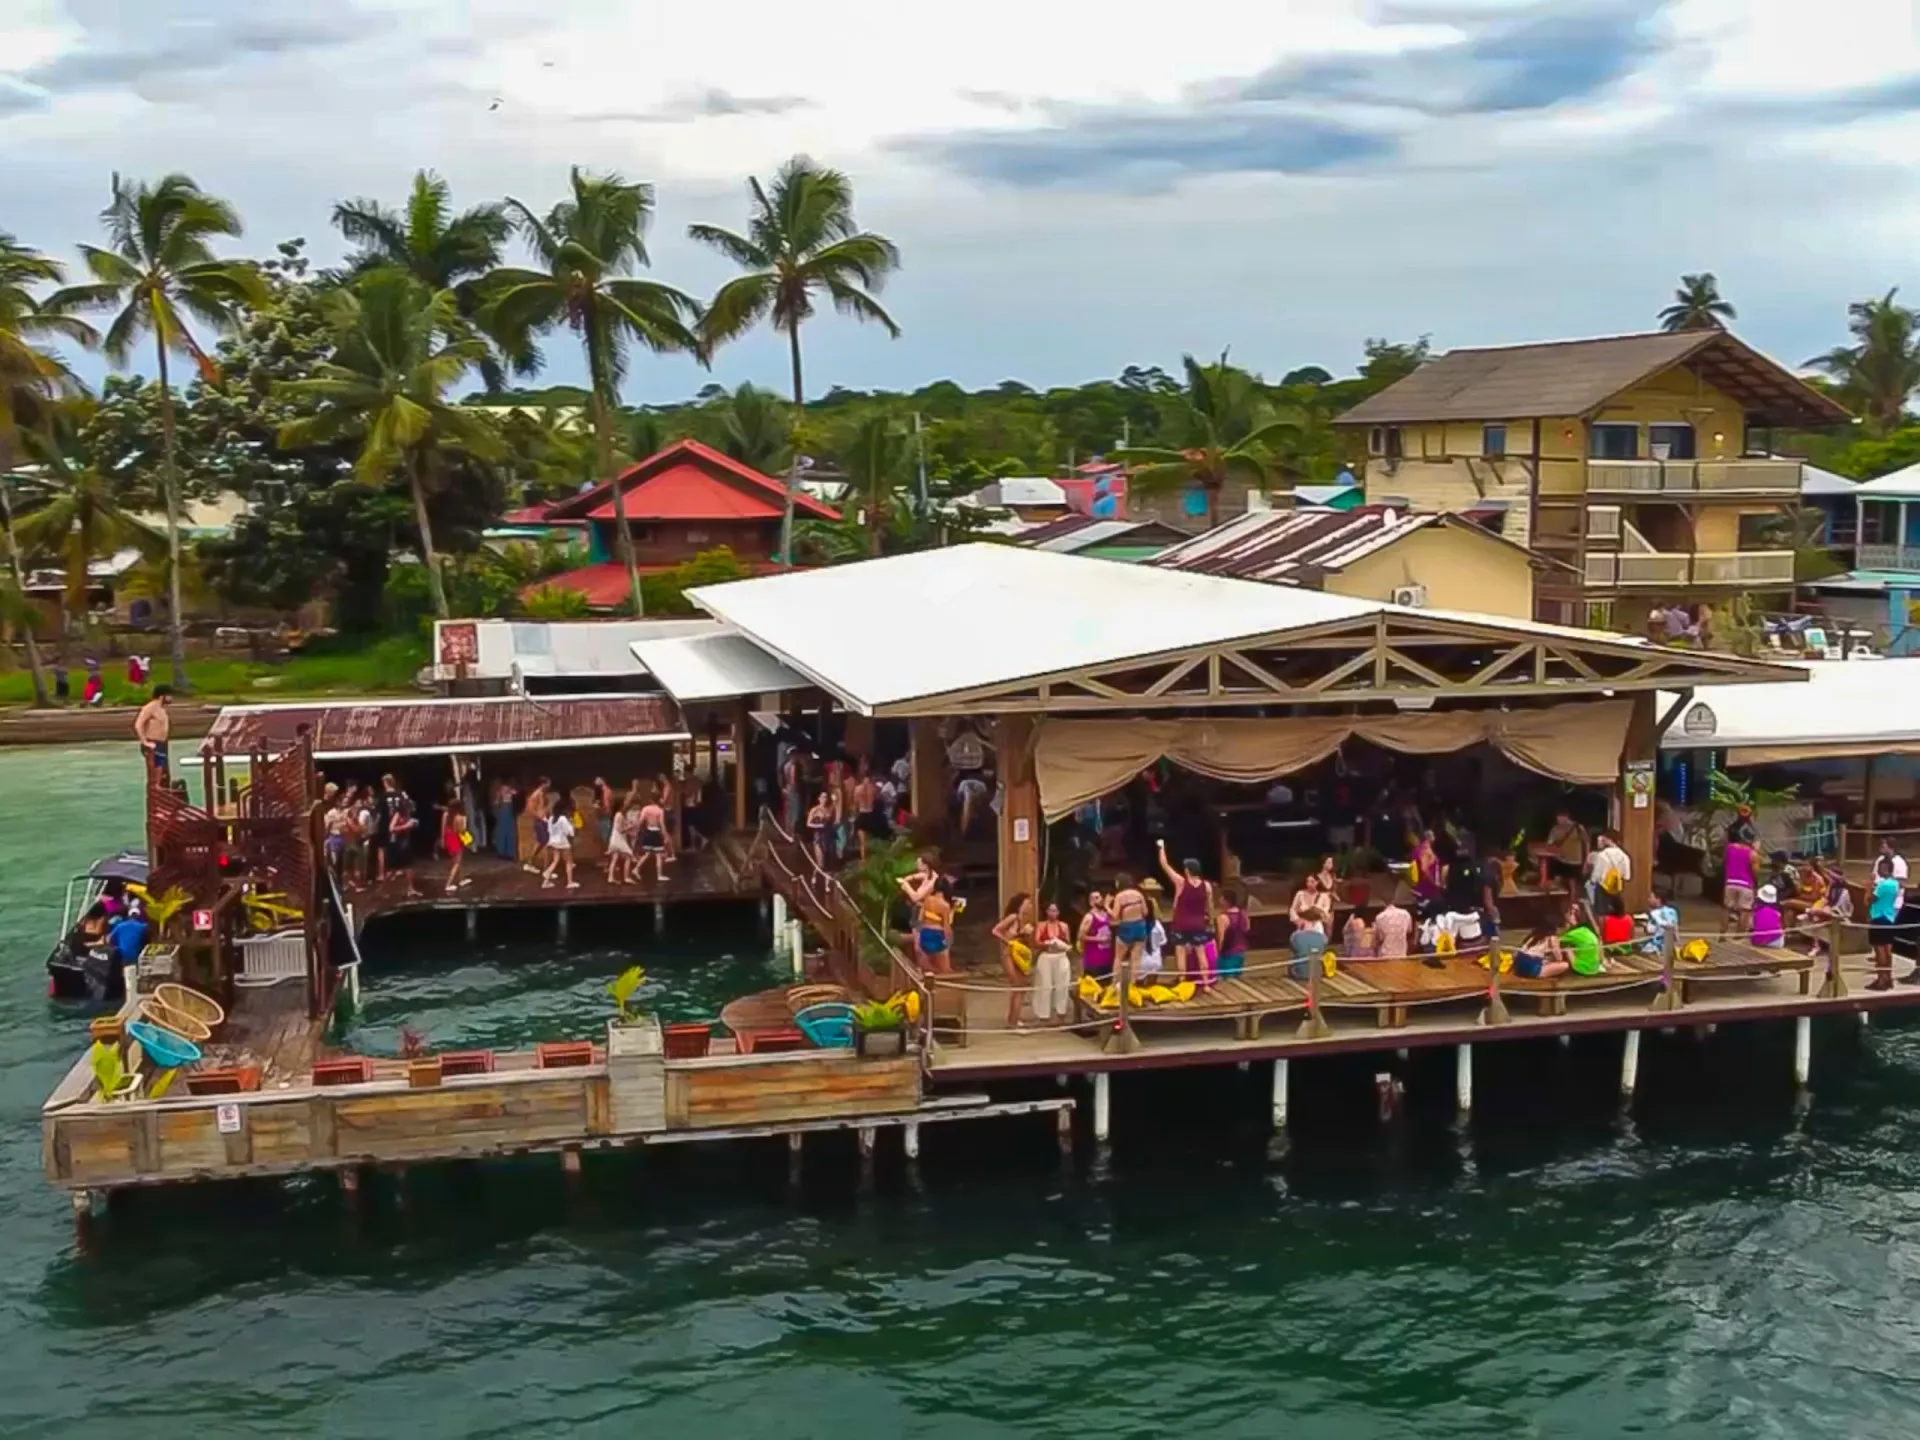 Aqua Lounge Bar in Panama, North America | Bars,Lounges - Rated 3.7